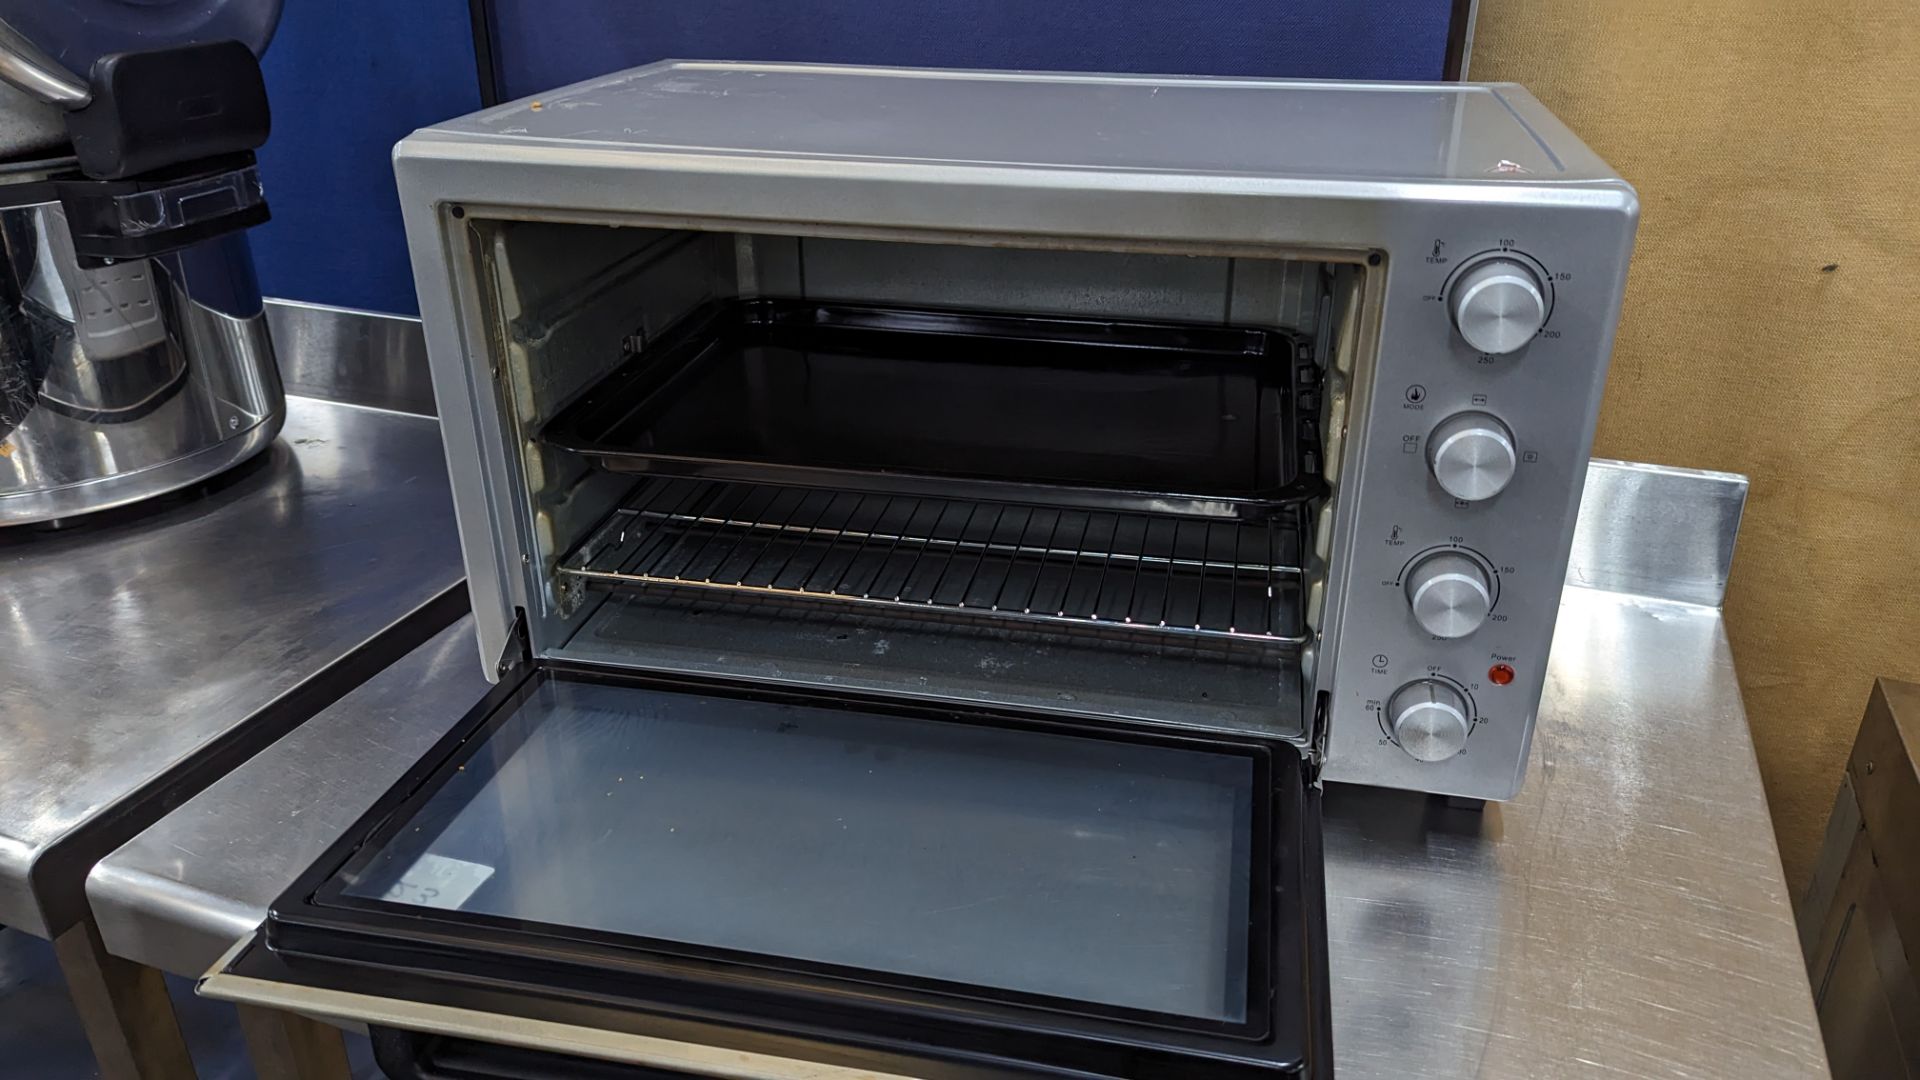 Adexa benchtop electric oven - Image 4 of 8